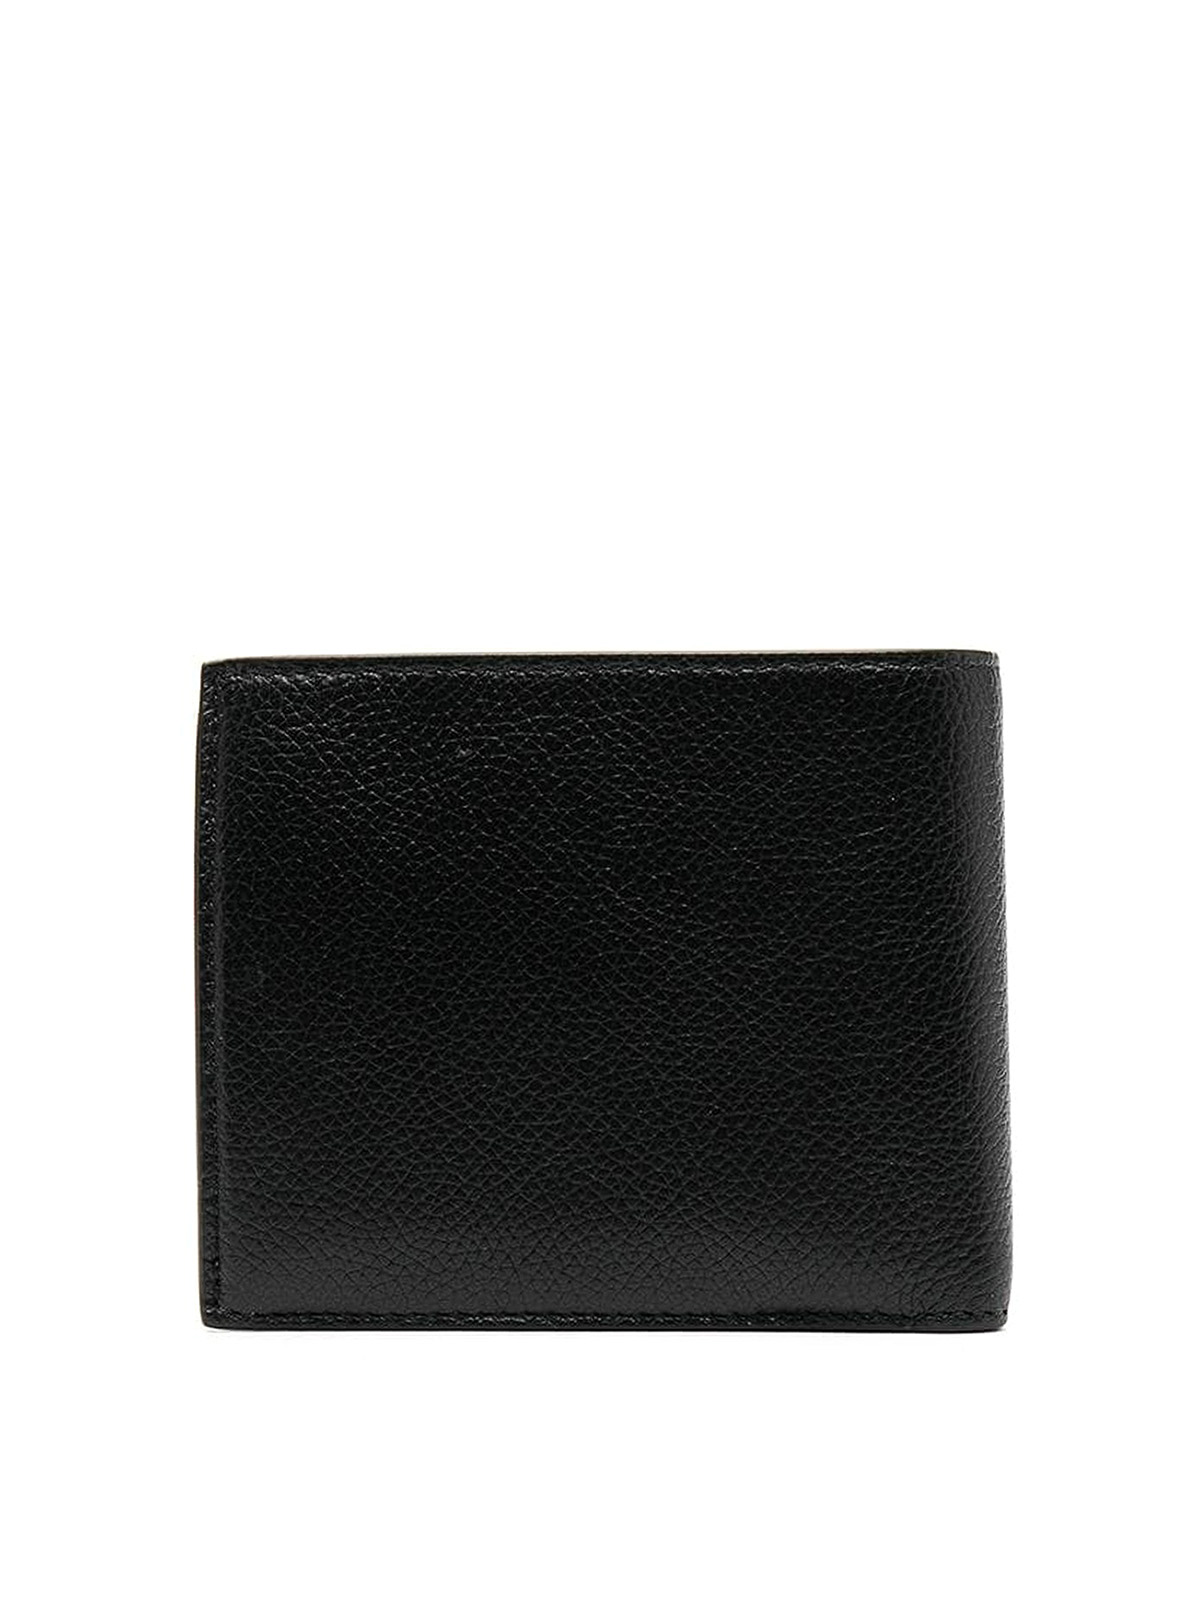 Shop Balenciaga Black Wallet In Negro